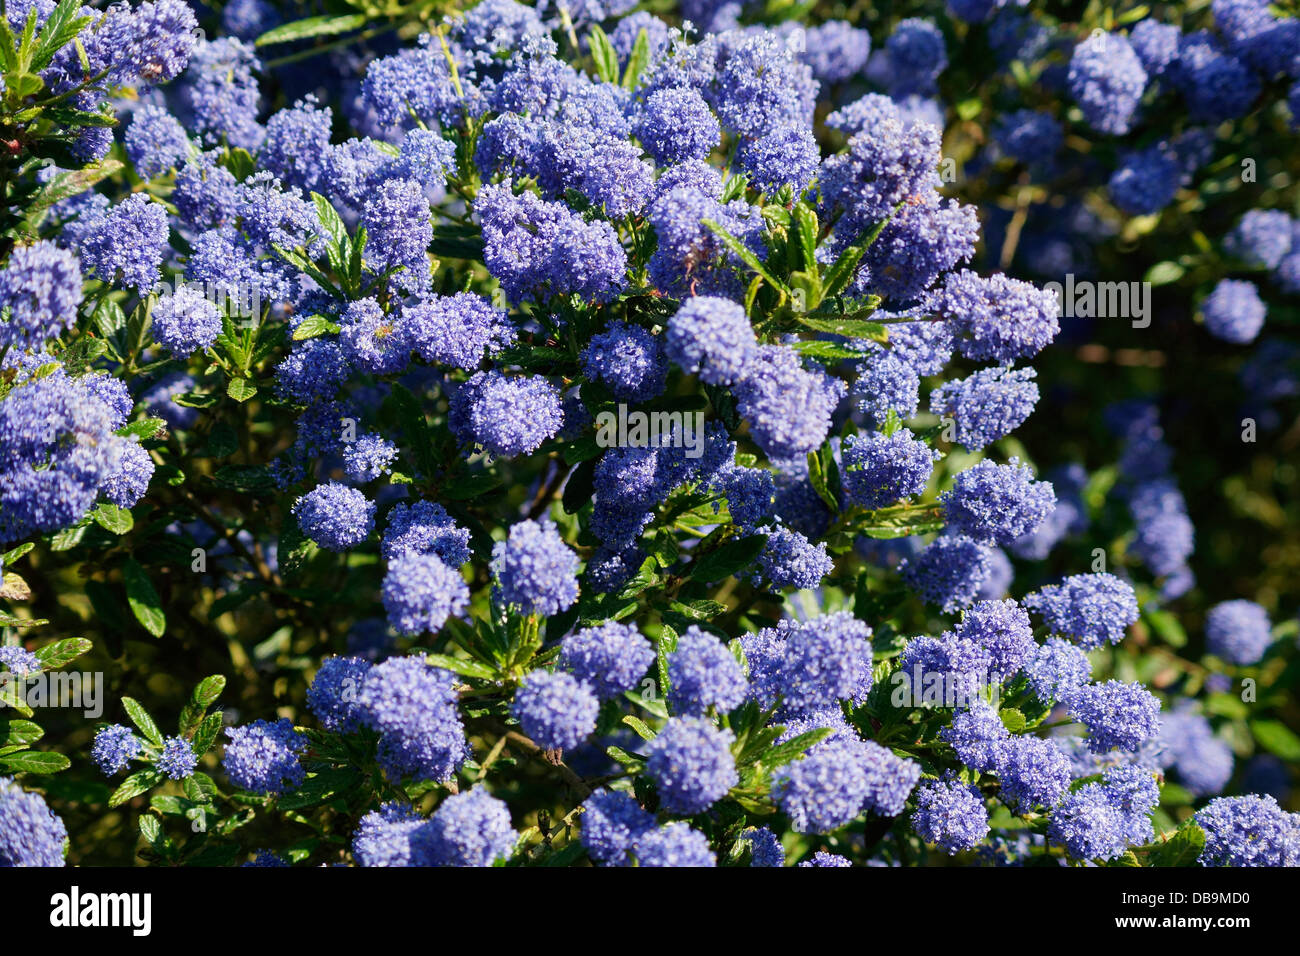 Ceanothus blue mound Californian Lilac shrub flowering in an organic garden Stock Photo